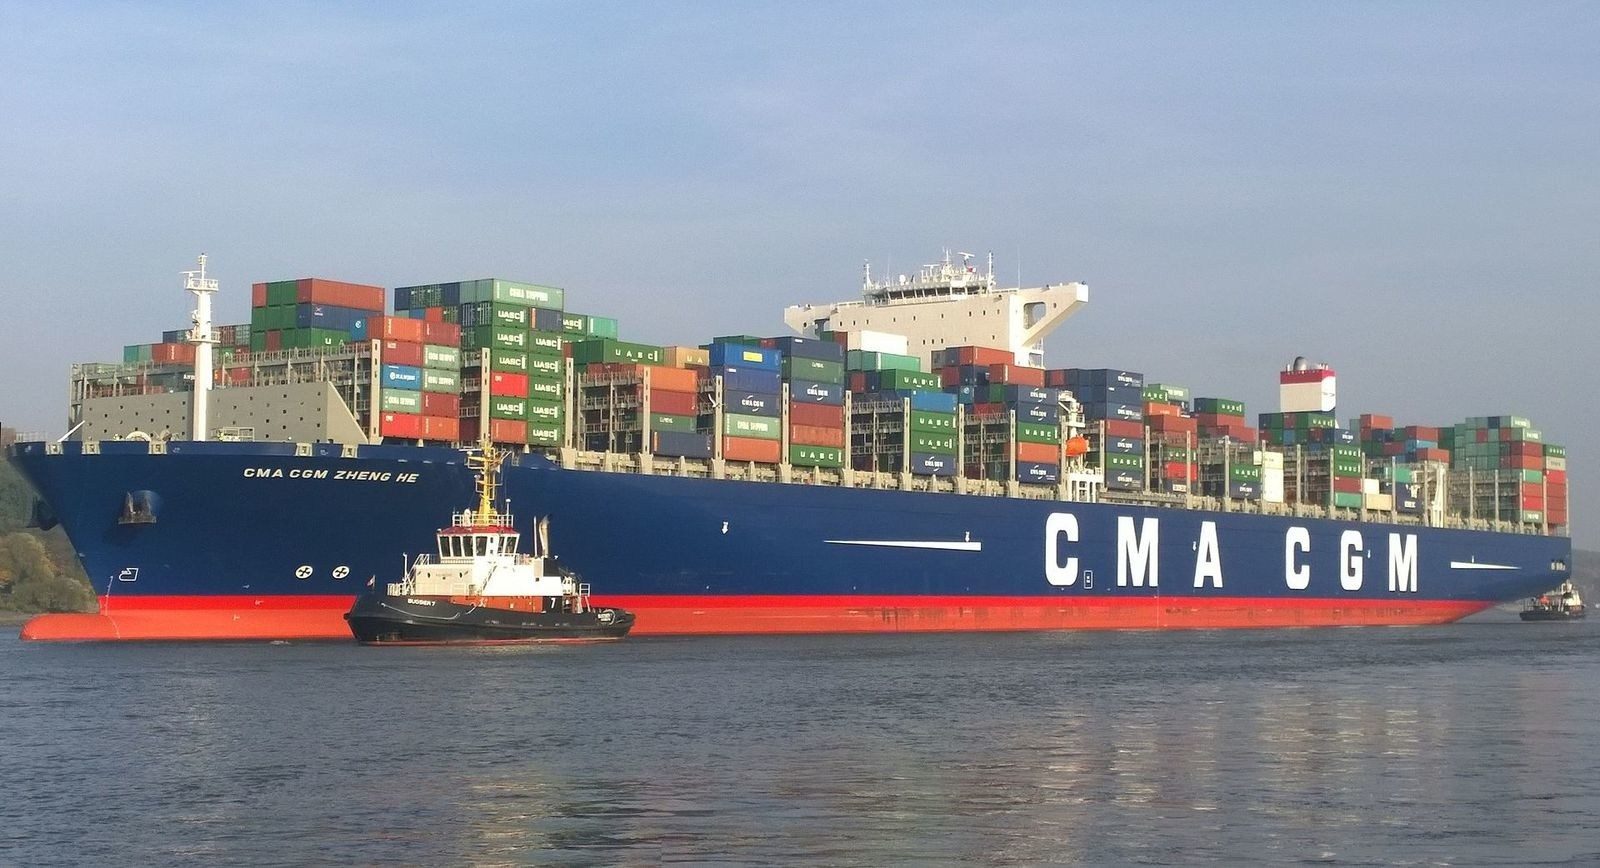 Cargo CMA CGM big ship